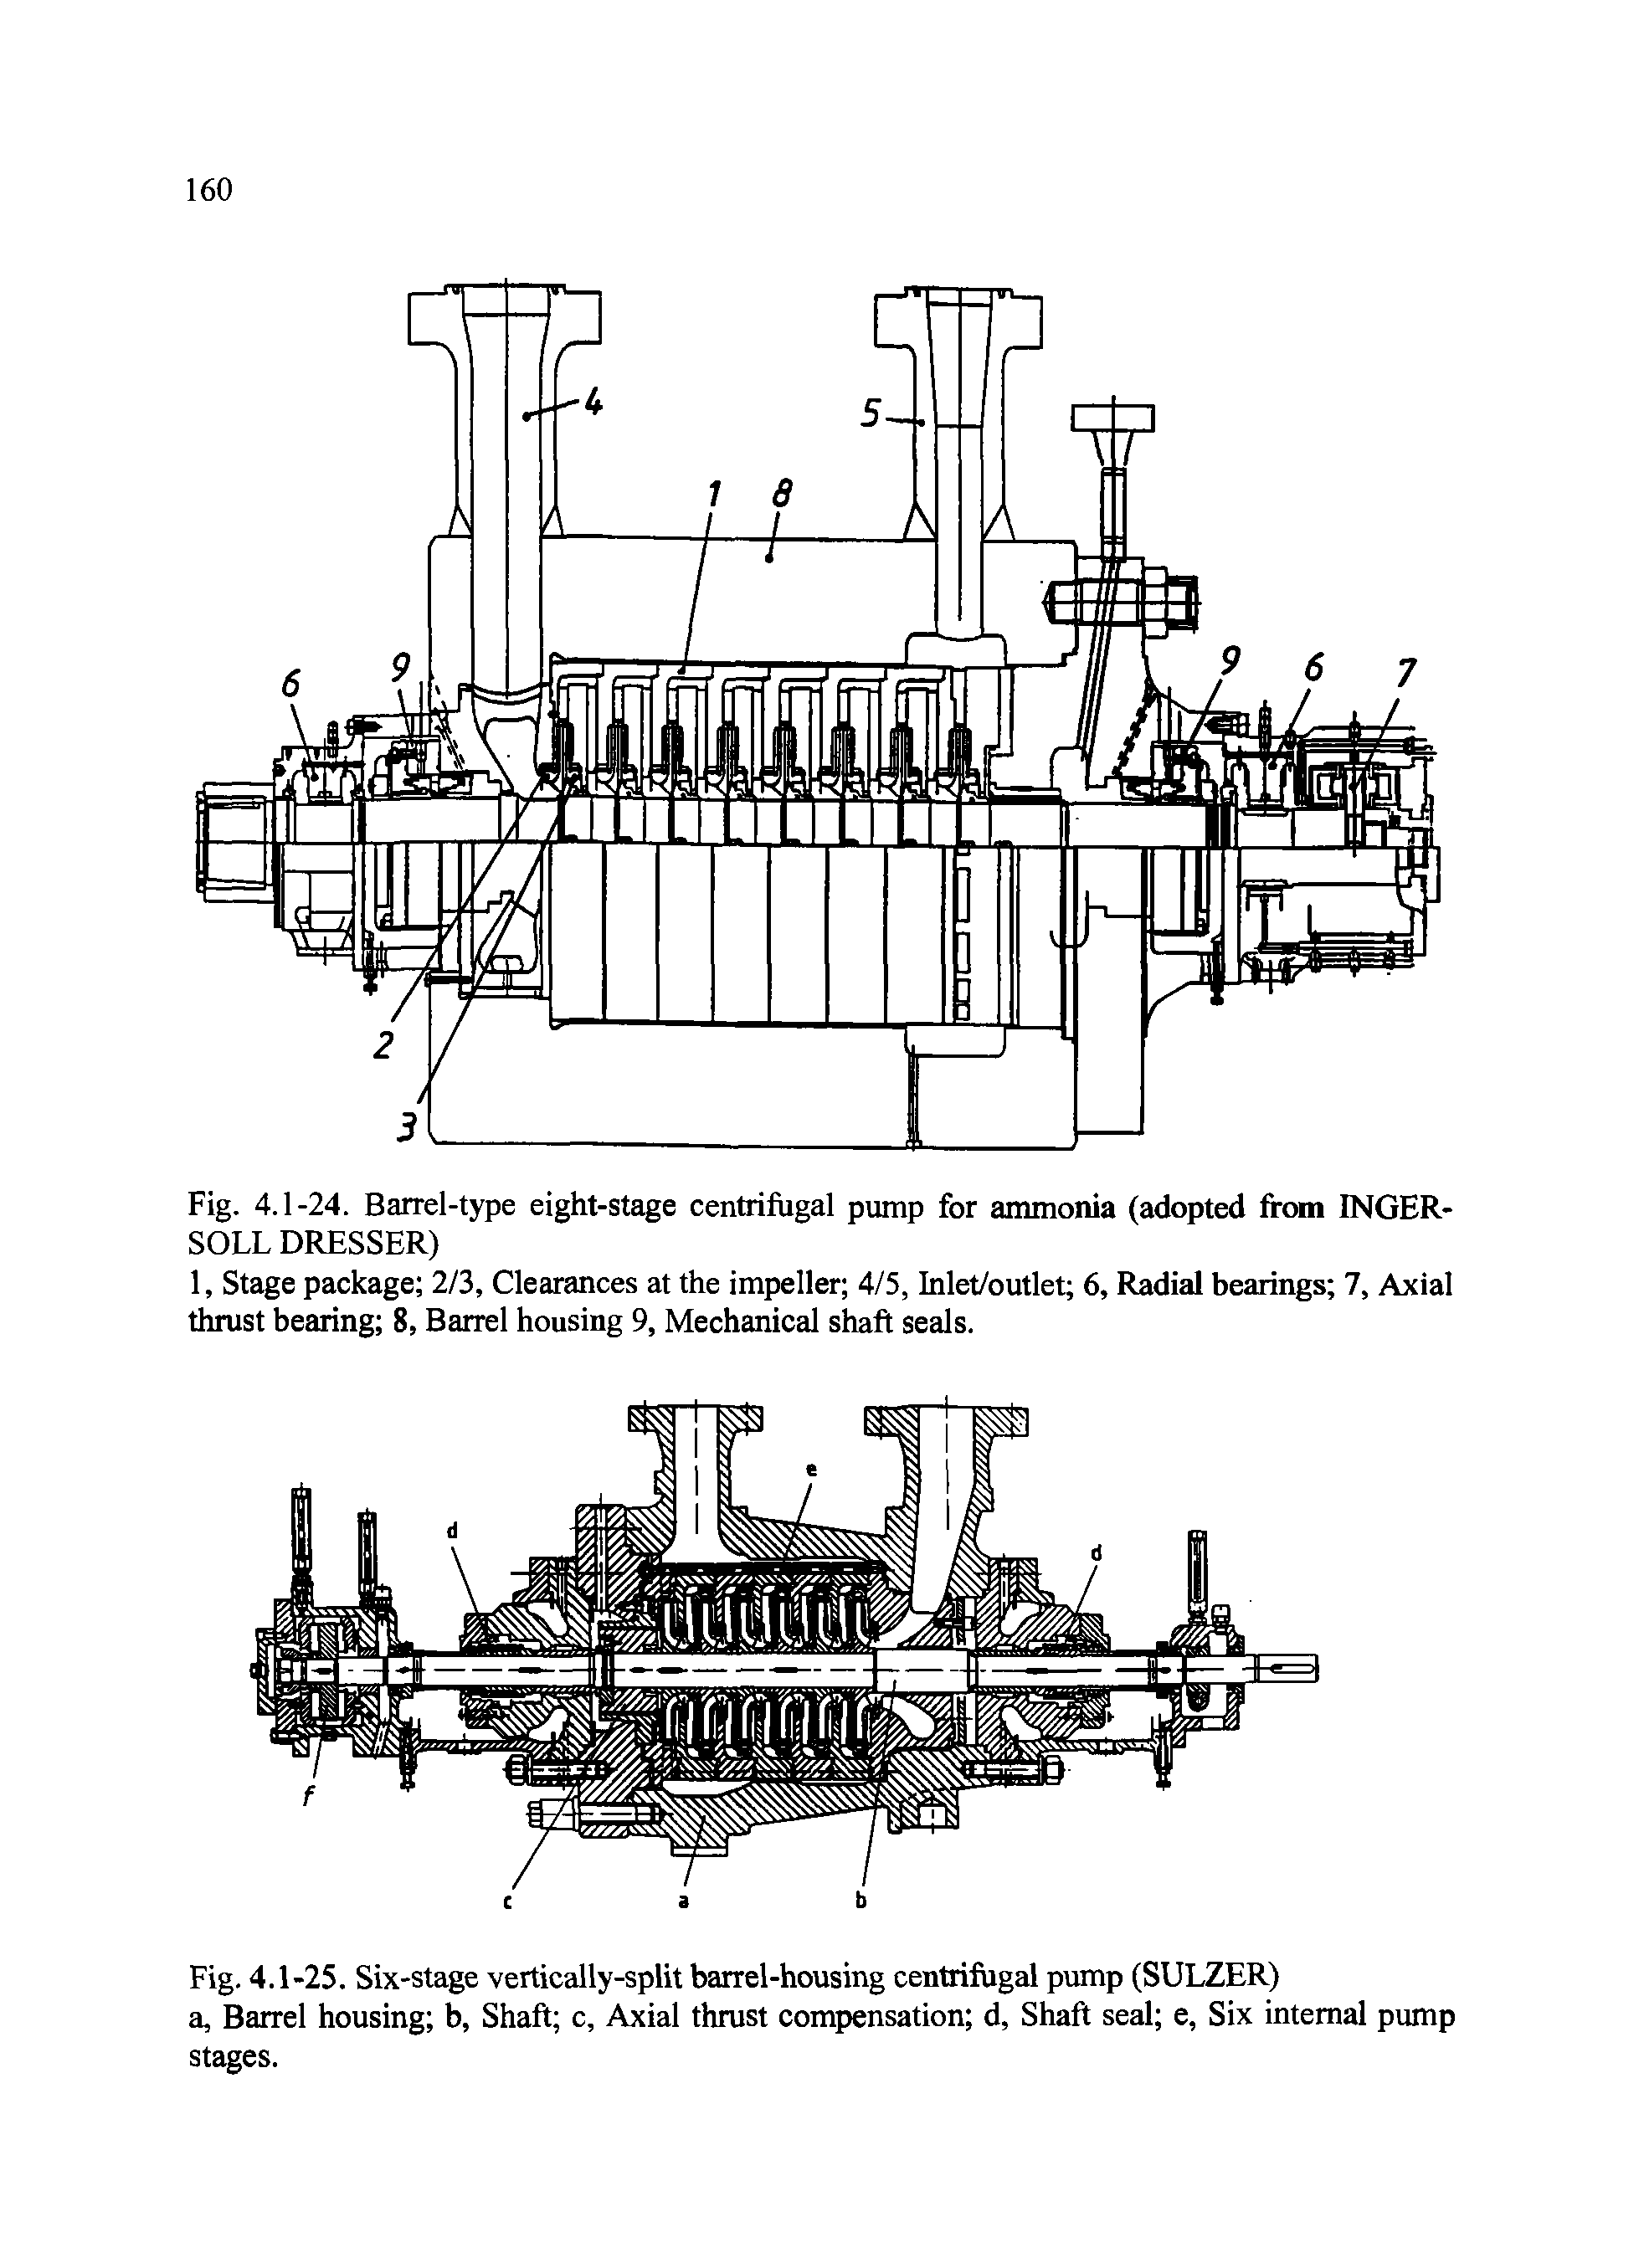 Fig. 4.1-25. Six-stage vertically-split barrel-housing centrifugal pump (SULZER)...